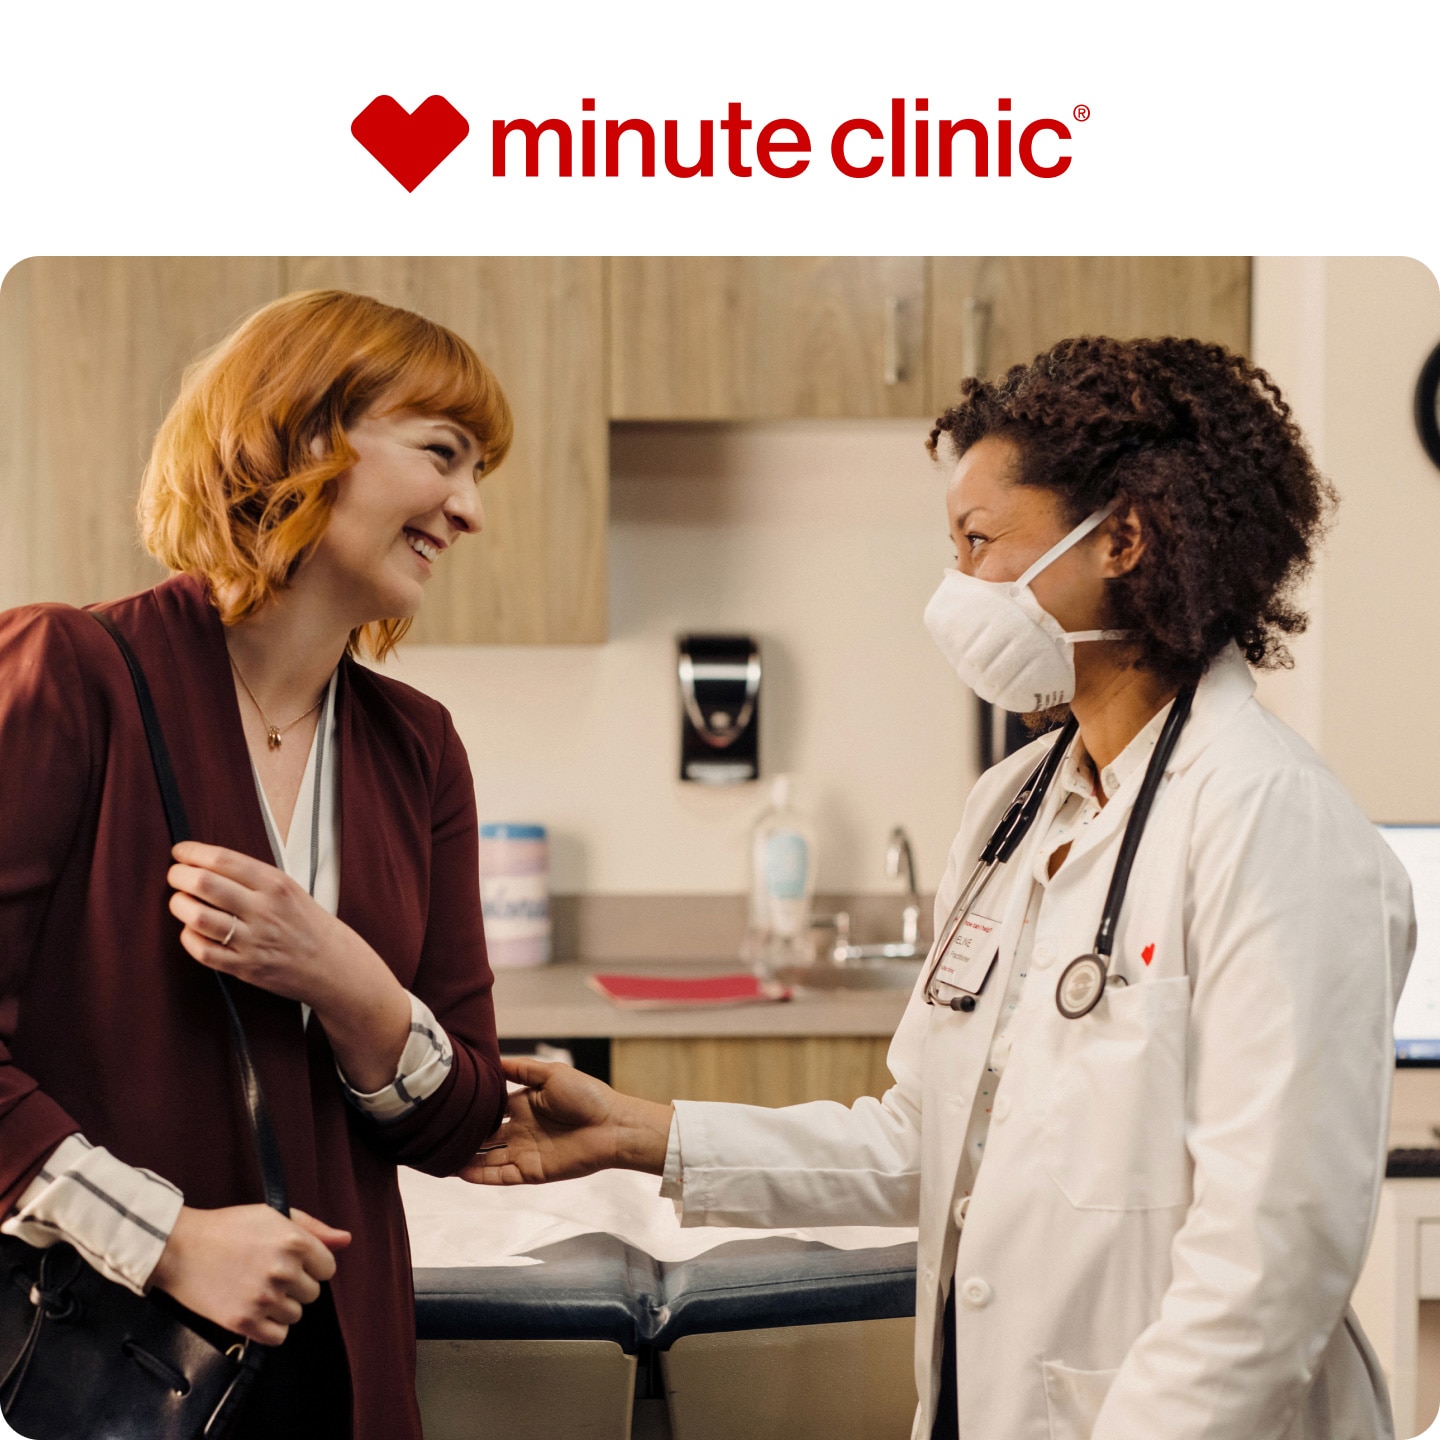 Minute Clinic Logo